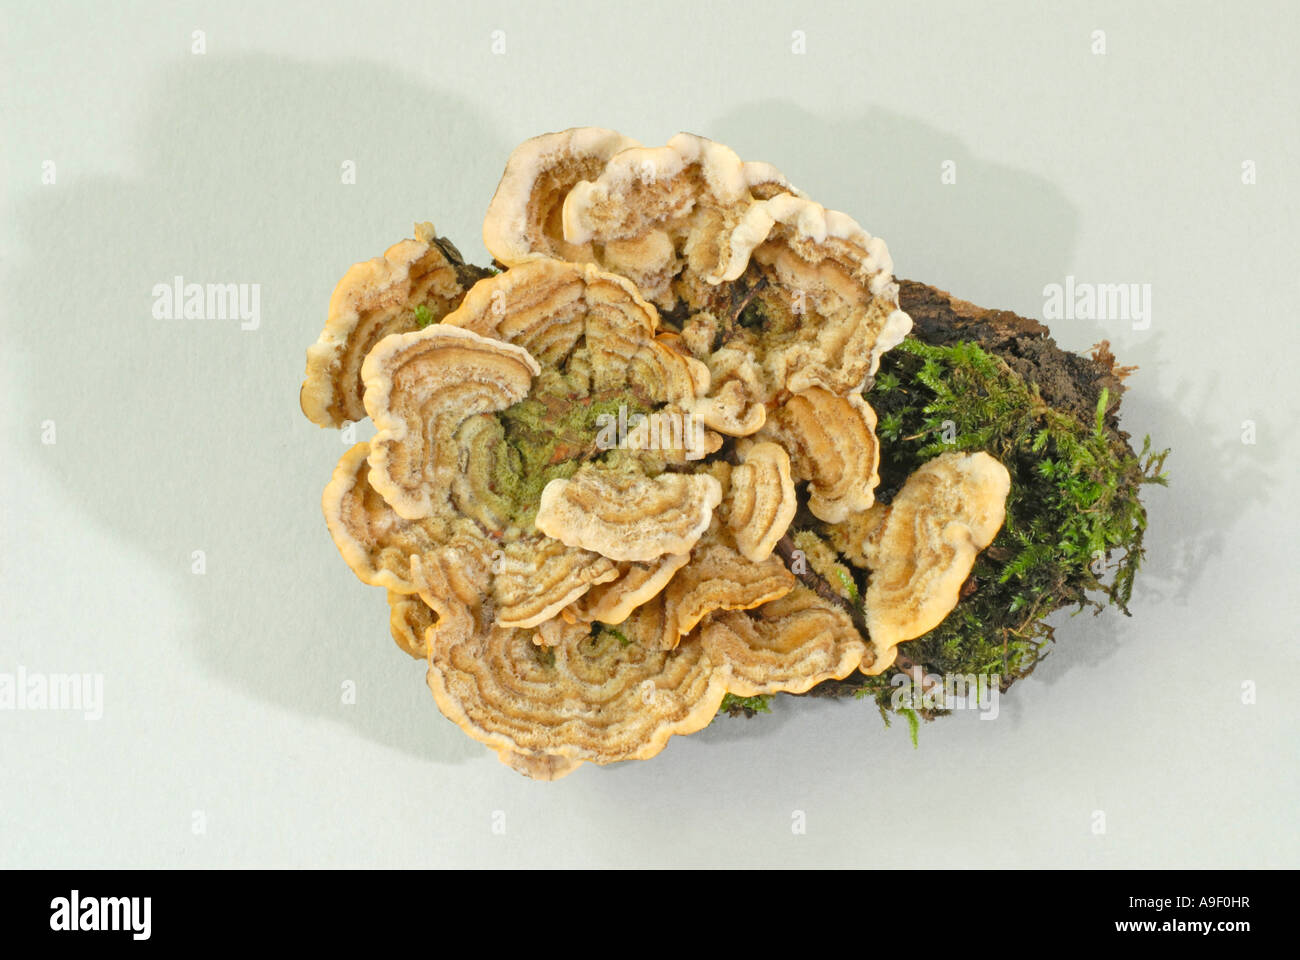 Queue de la Turquie, de champignons polypores multicolores (Trametes versicolor, Coriolus versicolor) sur journal moussu Banque D'Images